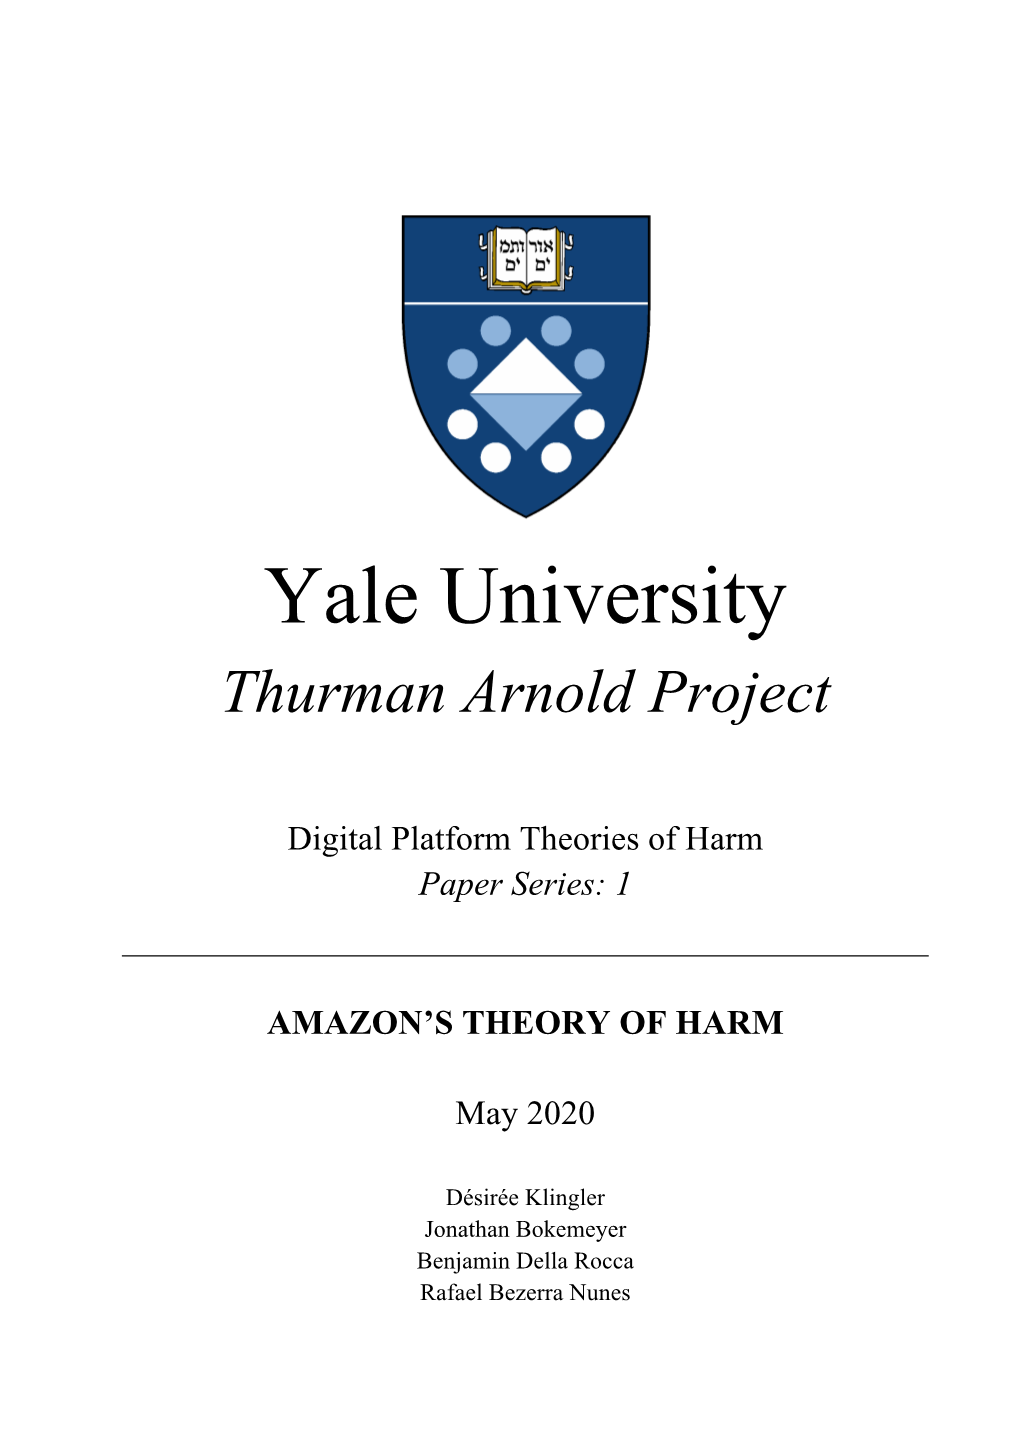 Amazon’S Theory of Harm